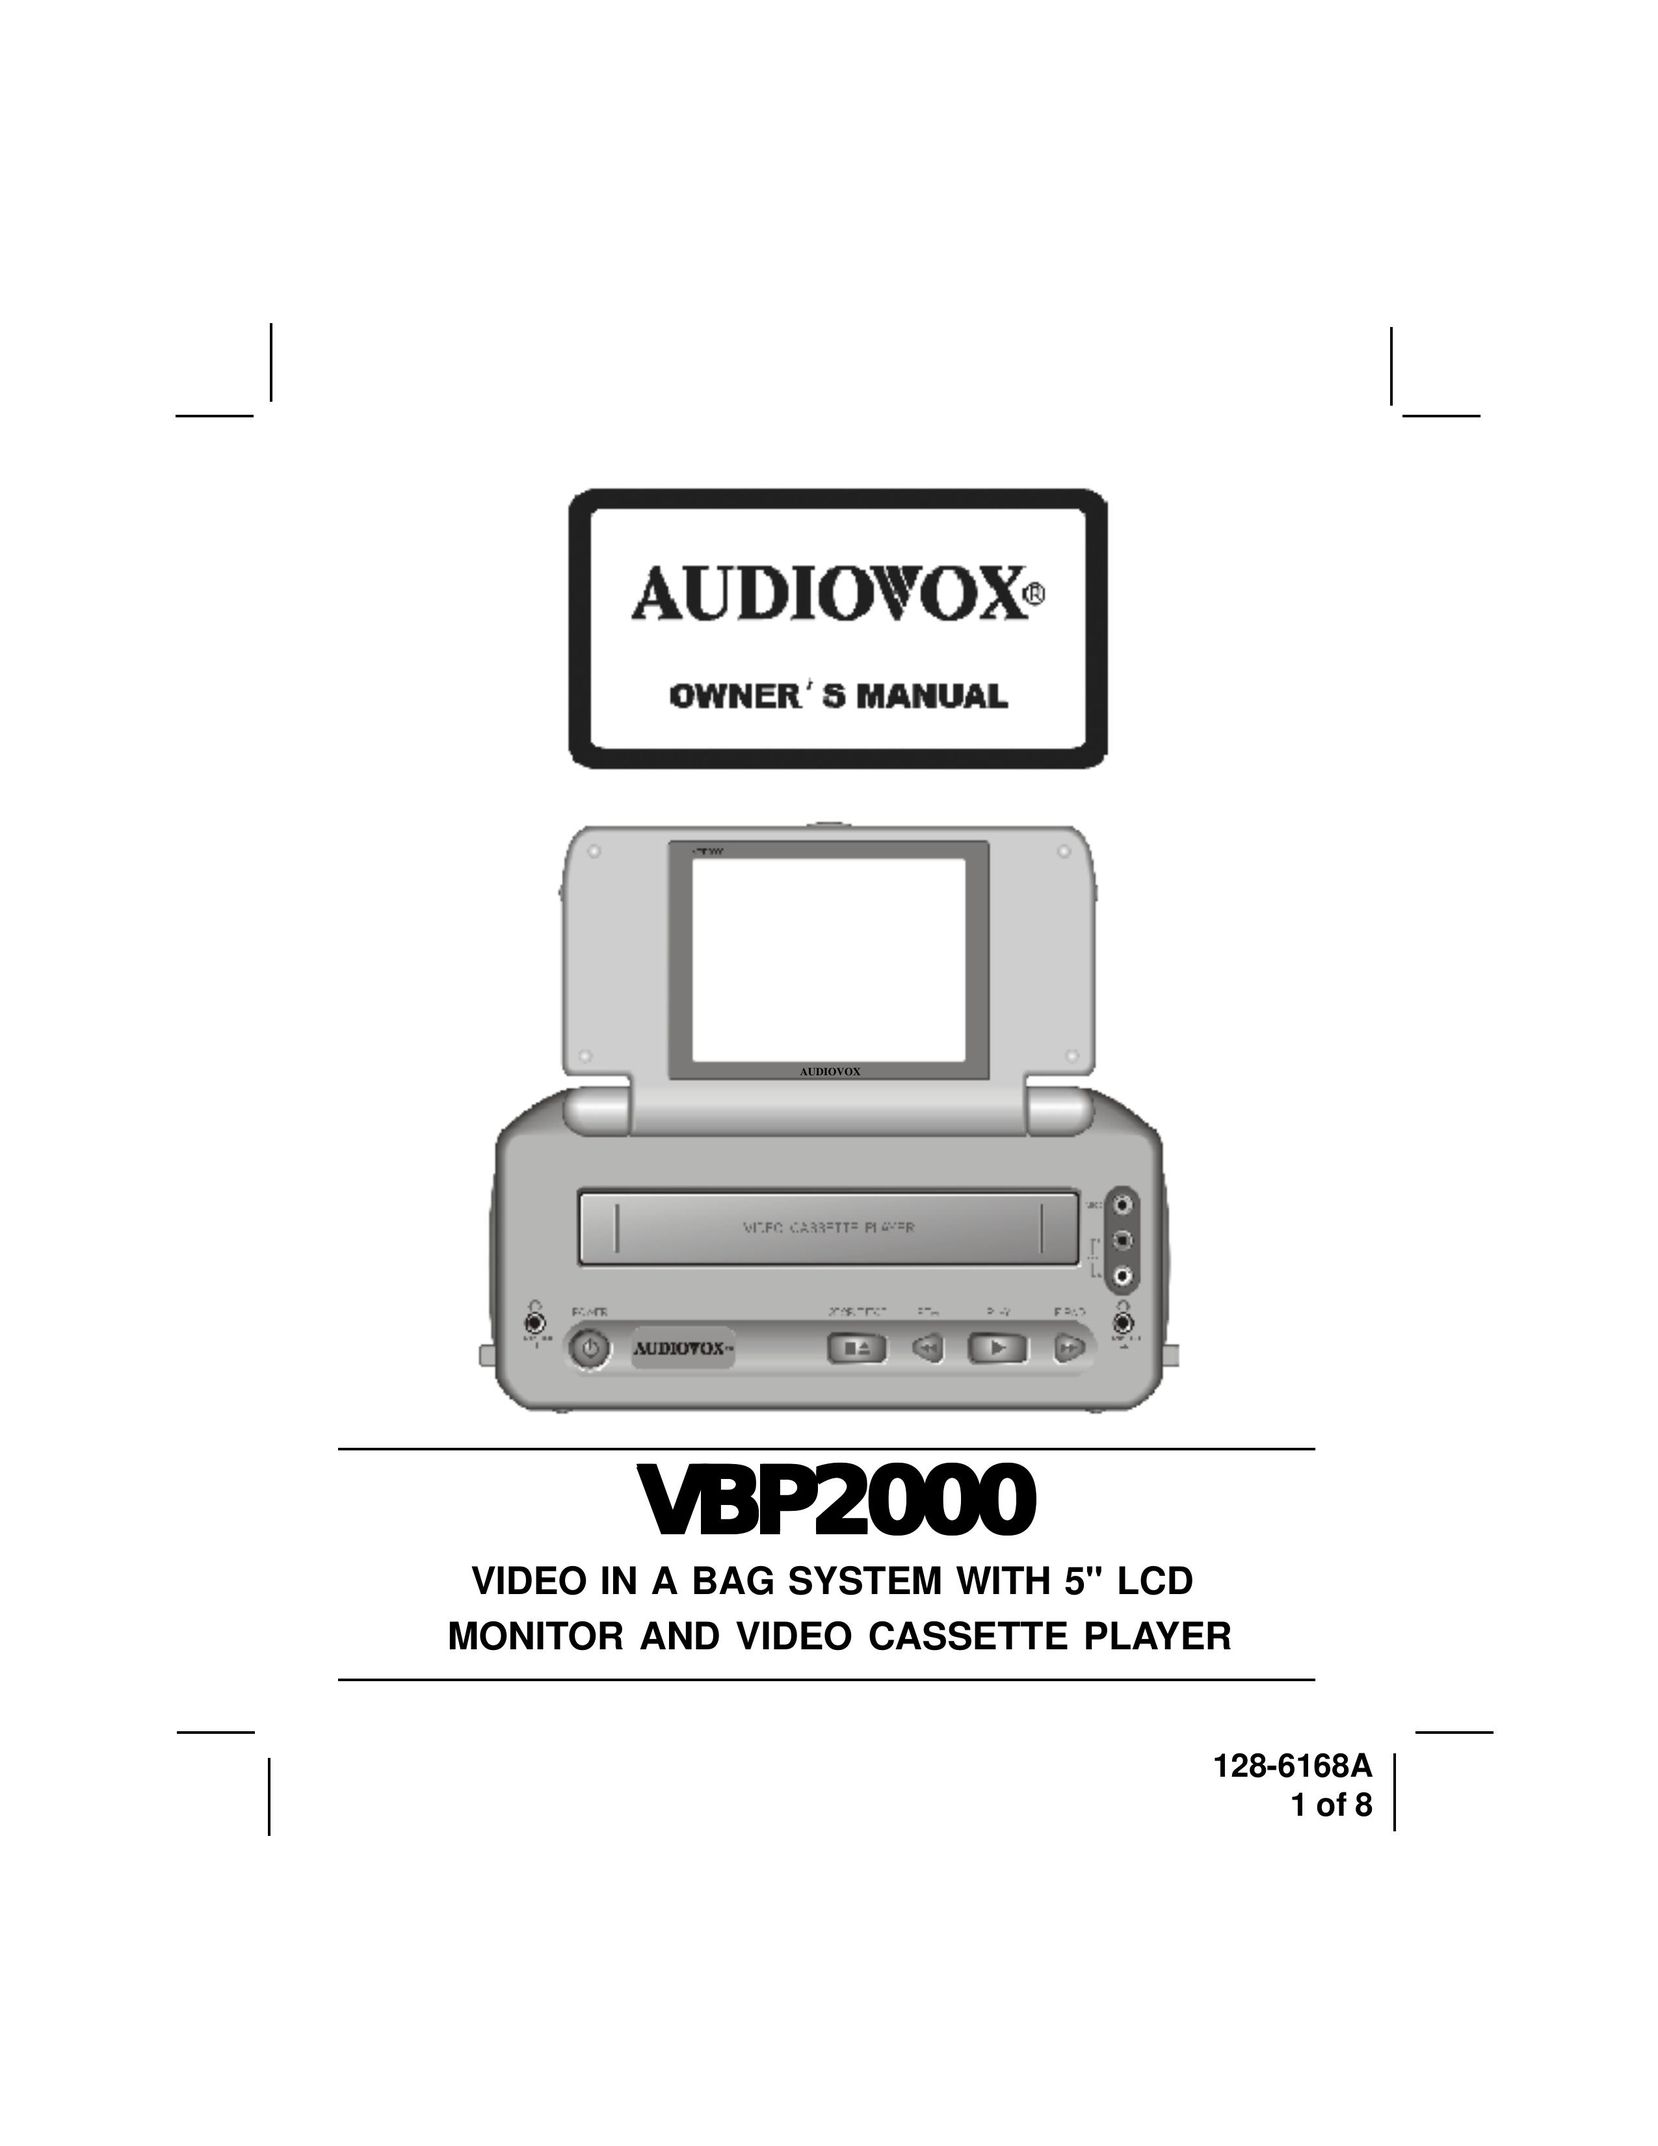 Audiovox VBP2000 VCR User Manual